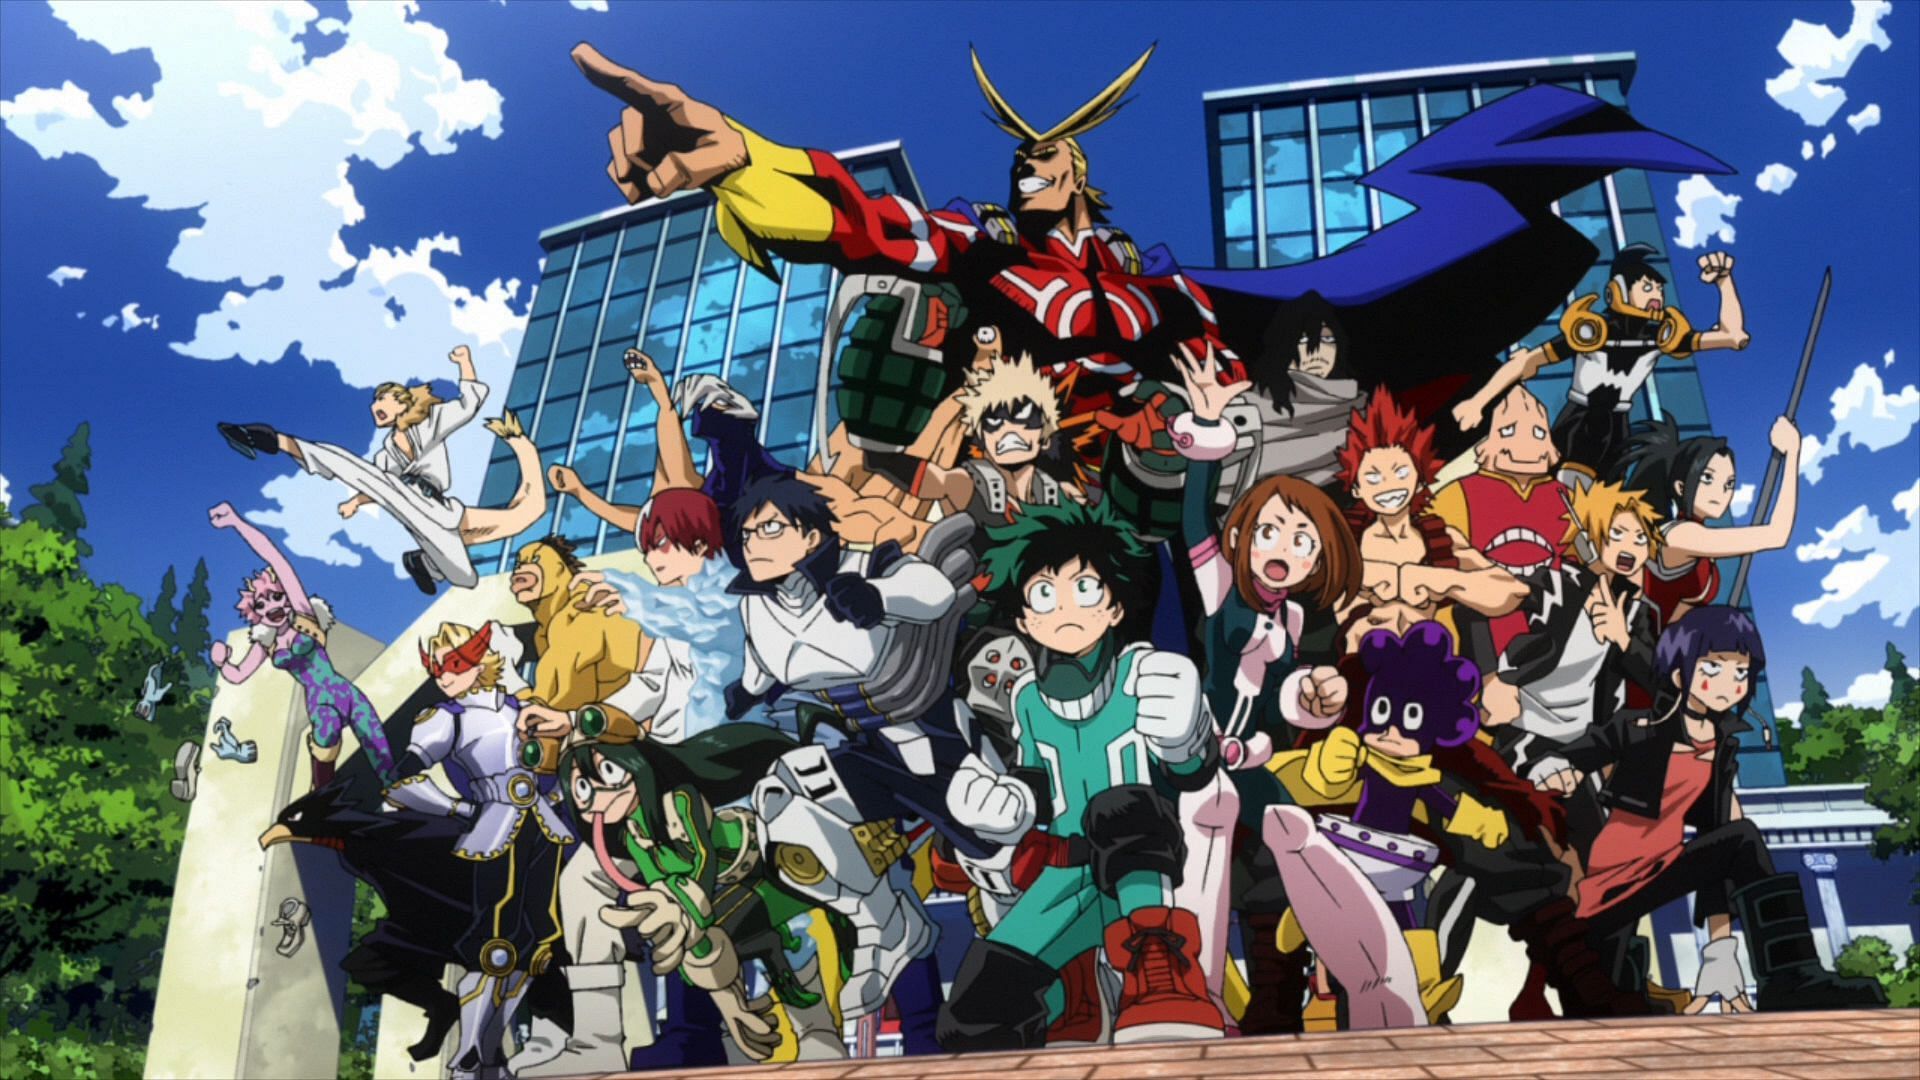 My Hero Academia 'UA Heroes Battle' Special Anime Episode Announced